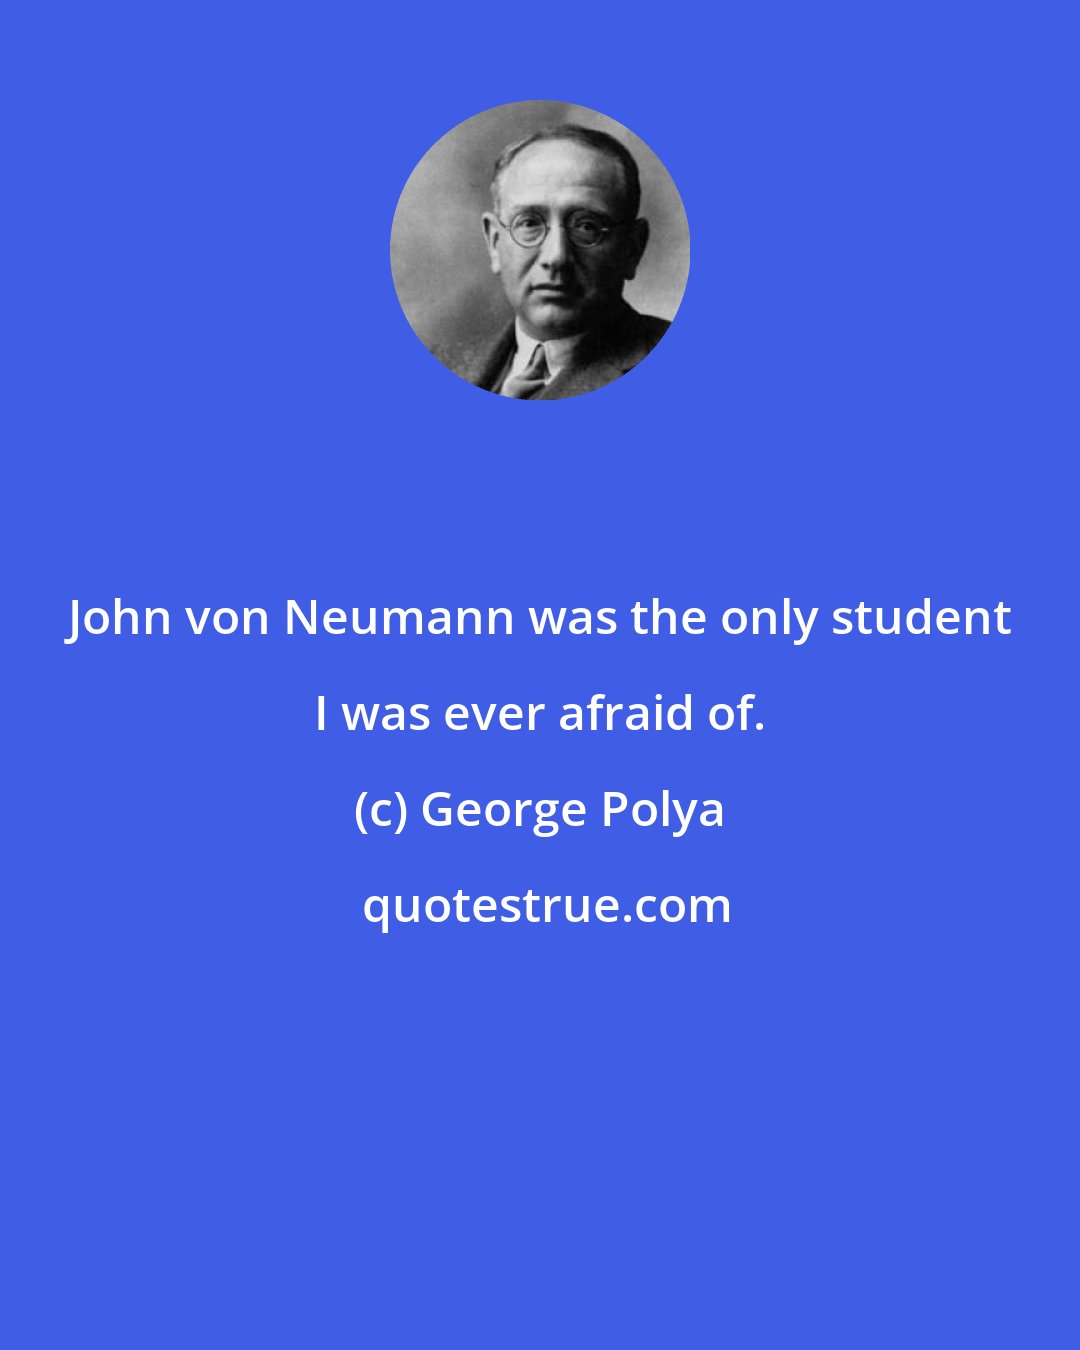 George Polya: John von Neumann was the only student I was ever afraid of.